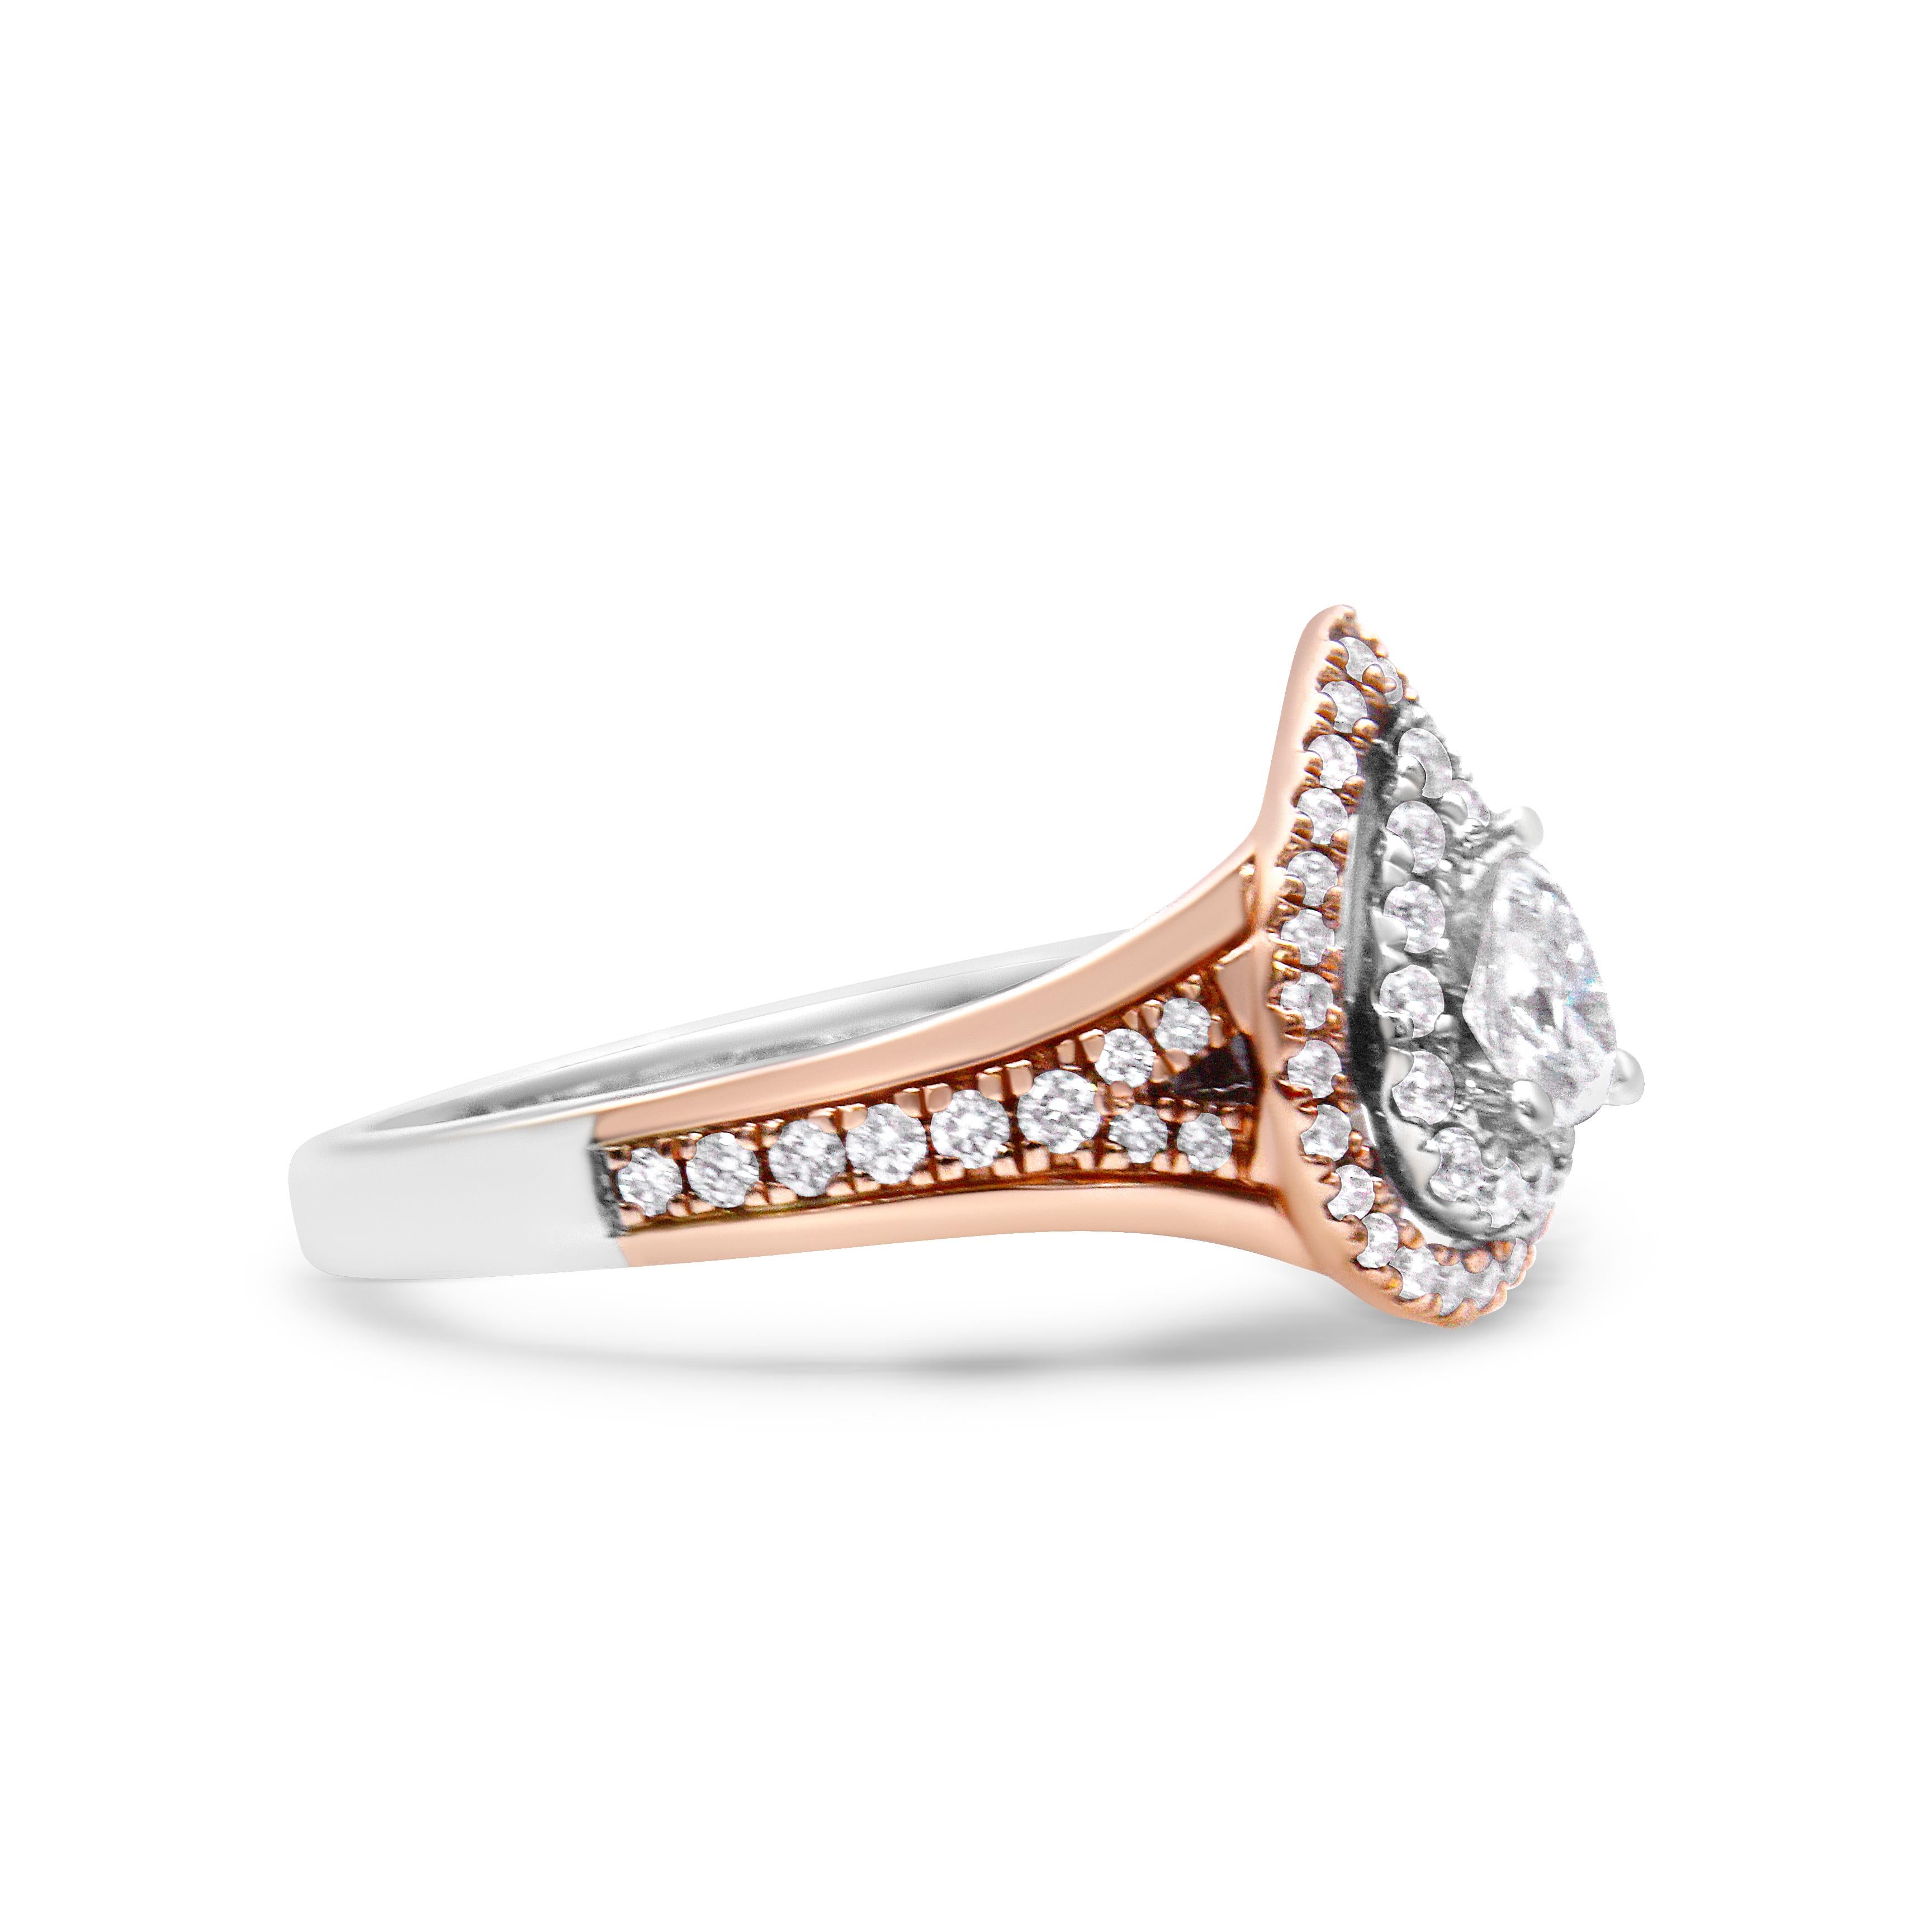 Women's 14K White & Rose Gold 1.0 Carat Diamond Pear Shaped Double Halo Engagement Ring